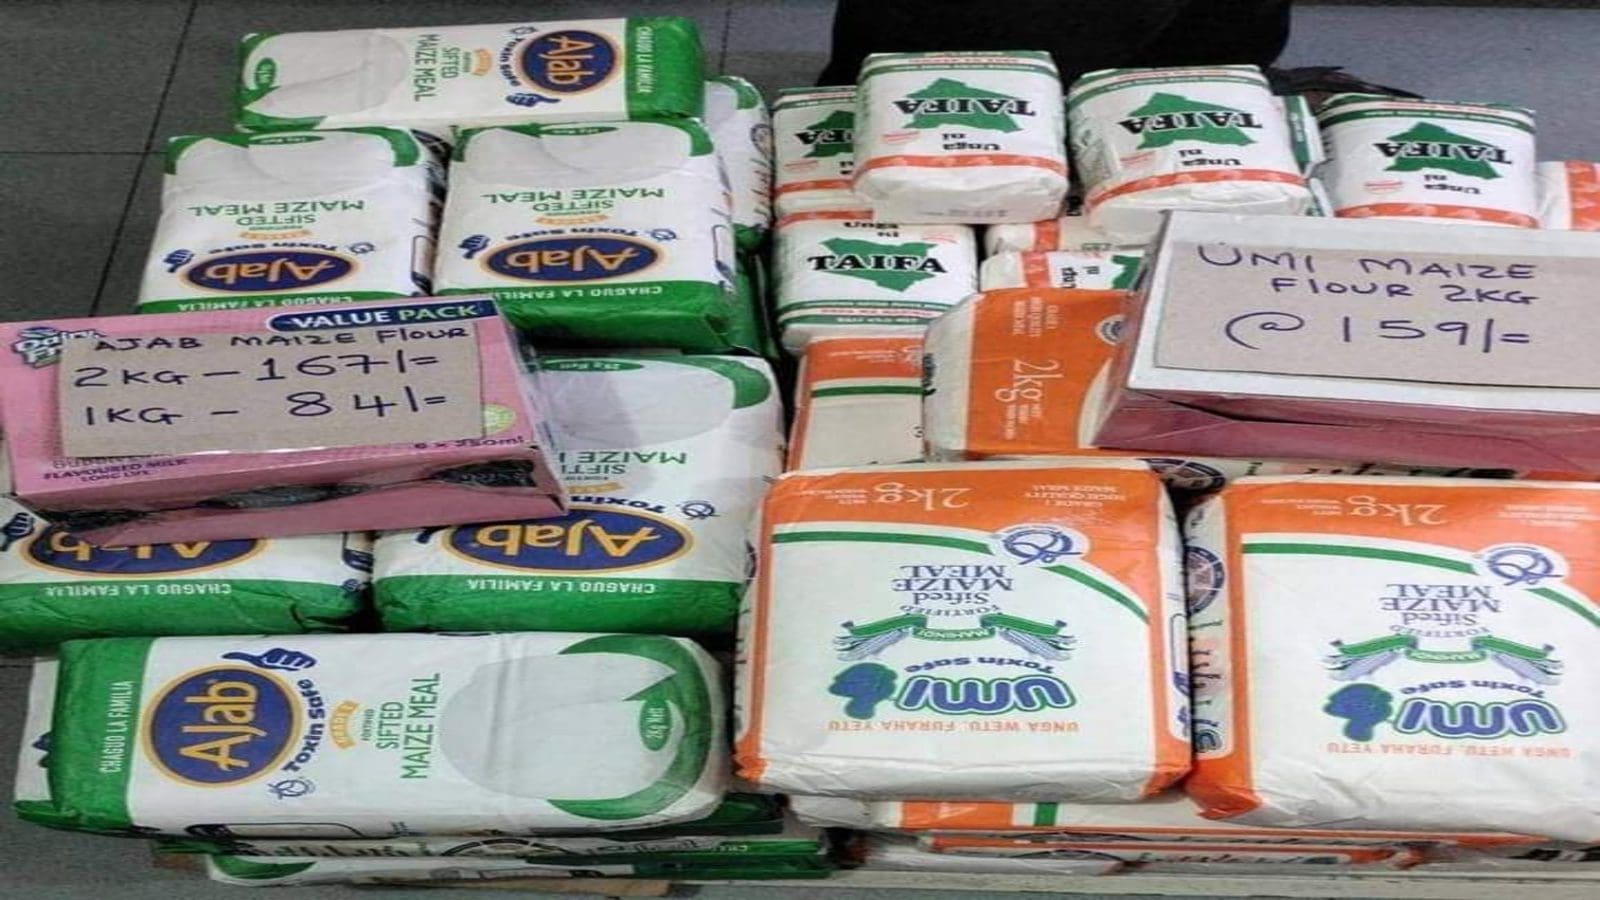 Maize flour brands, Ajab and Umi, slash retail prices by 24% amid maize shortage